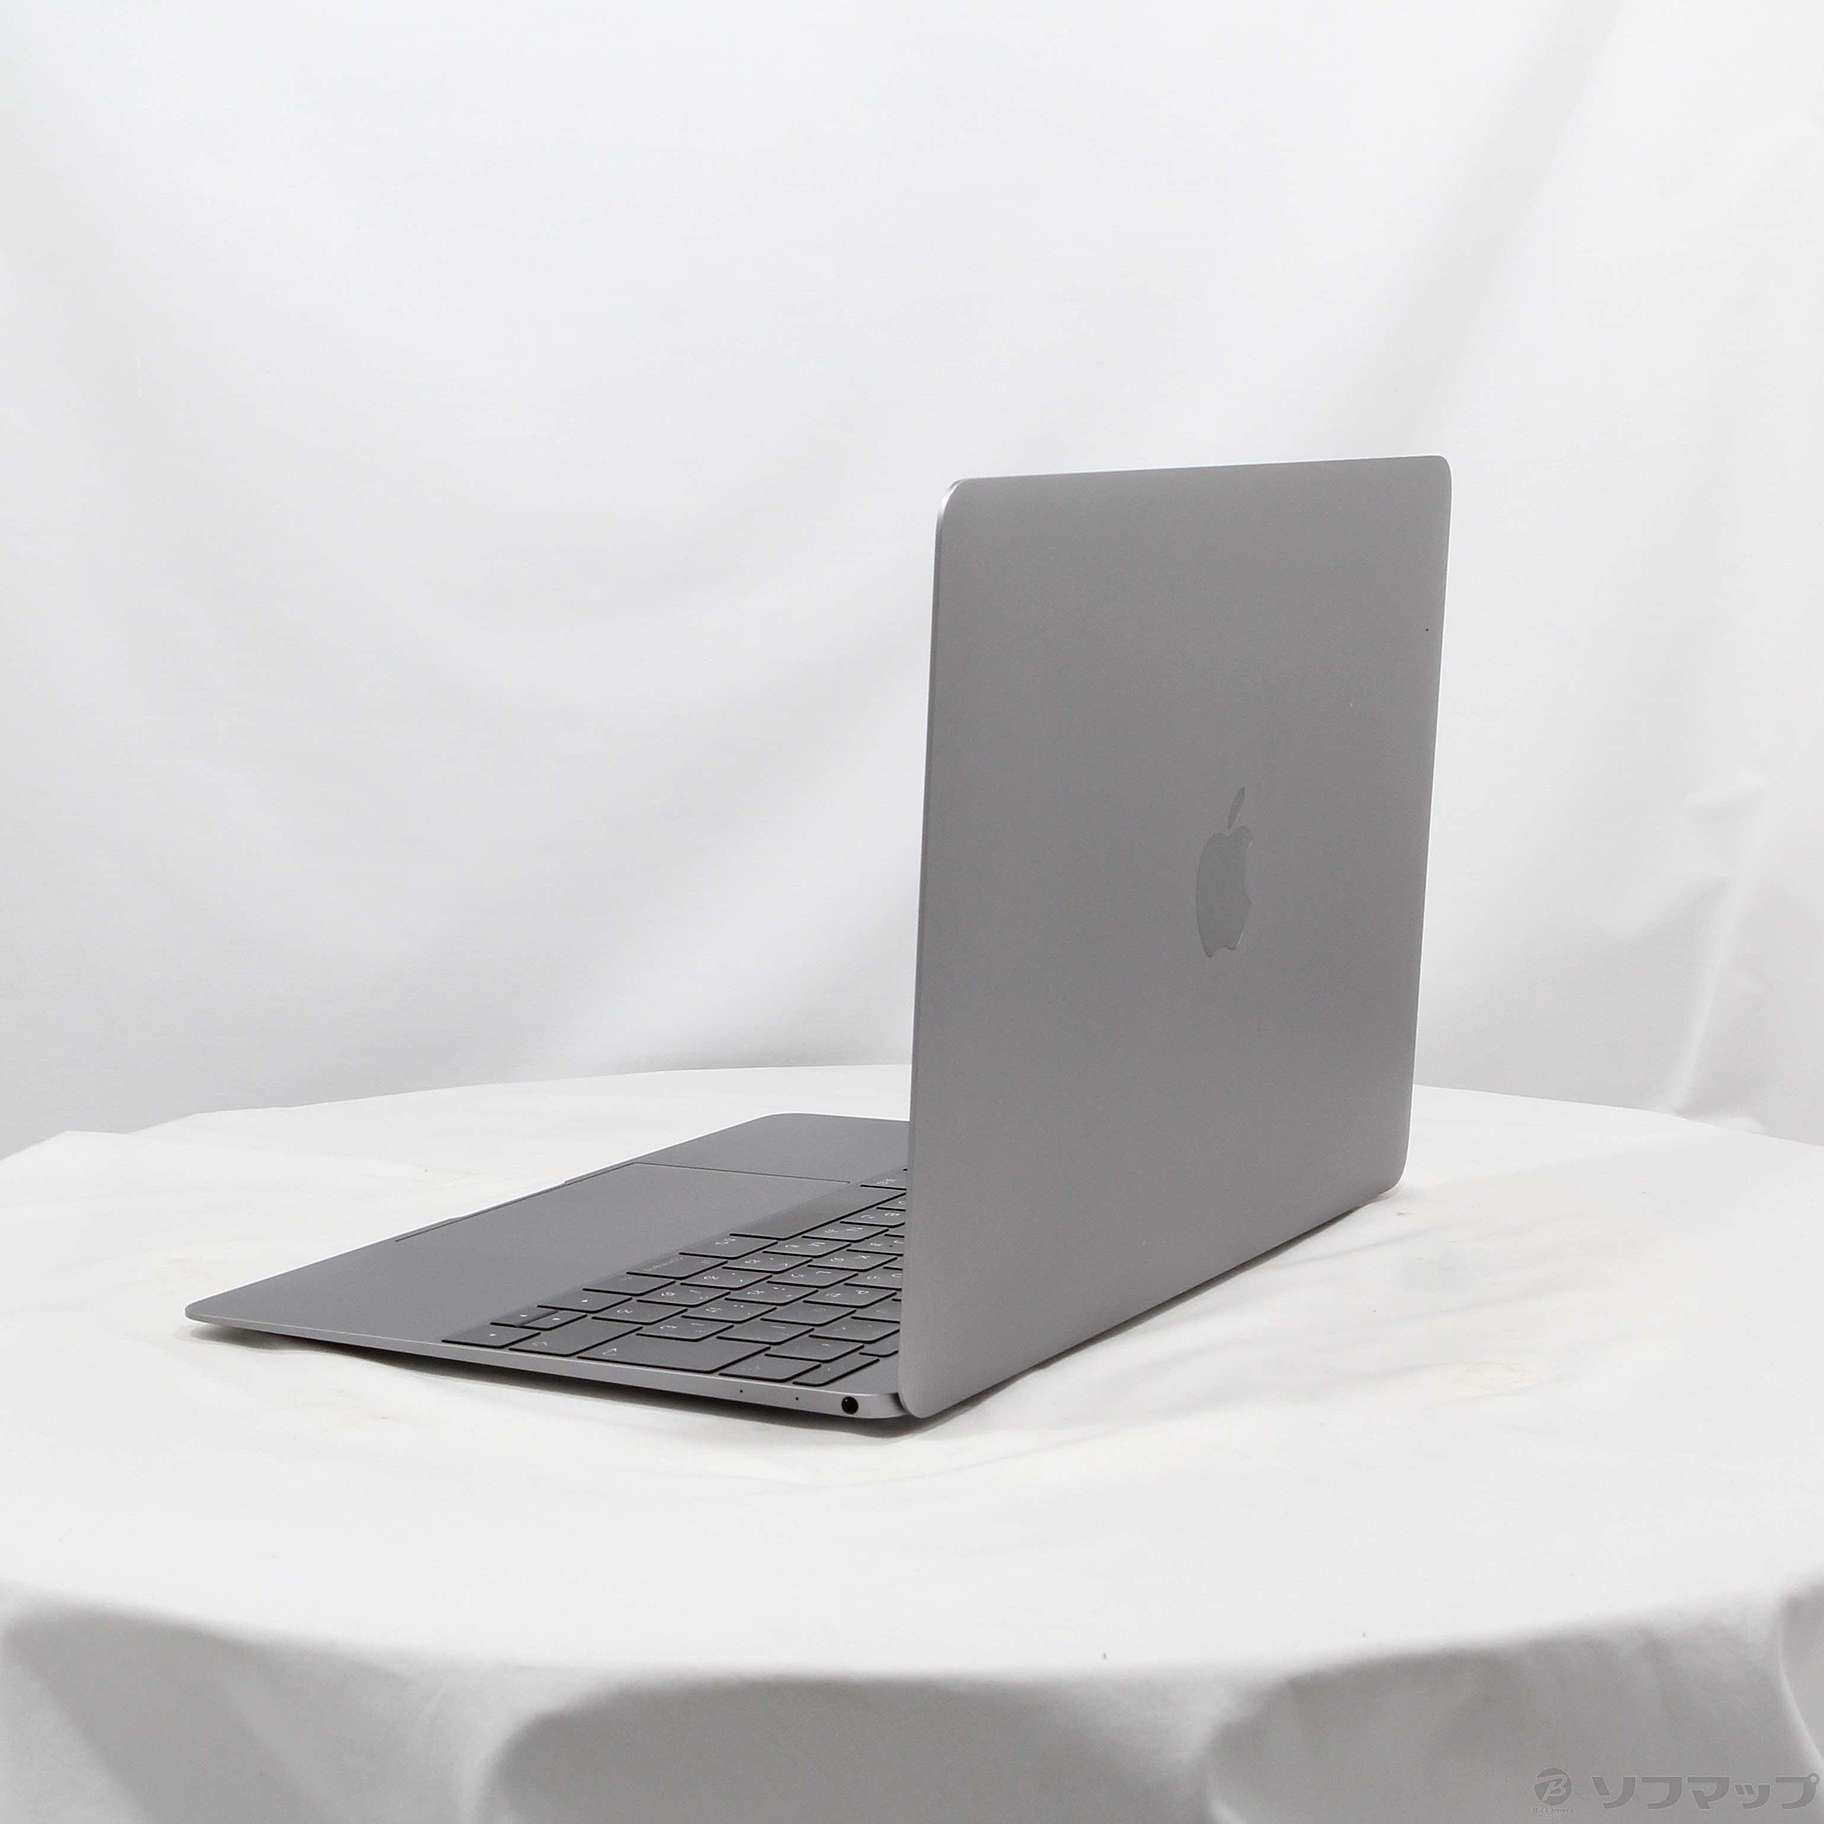 APPLE MacBook MACBOOK MNYF2J A 2017年製造 - タブレット